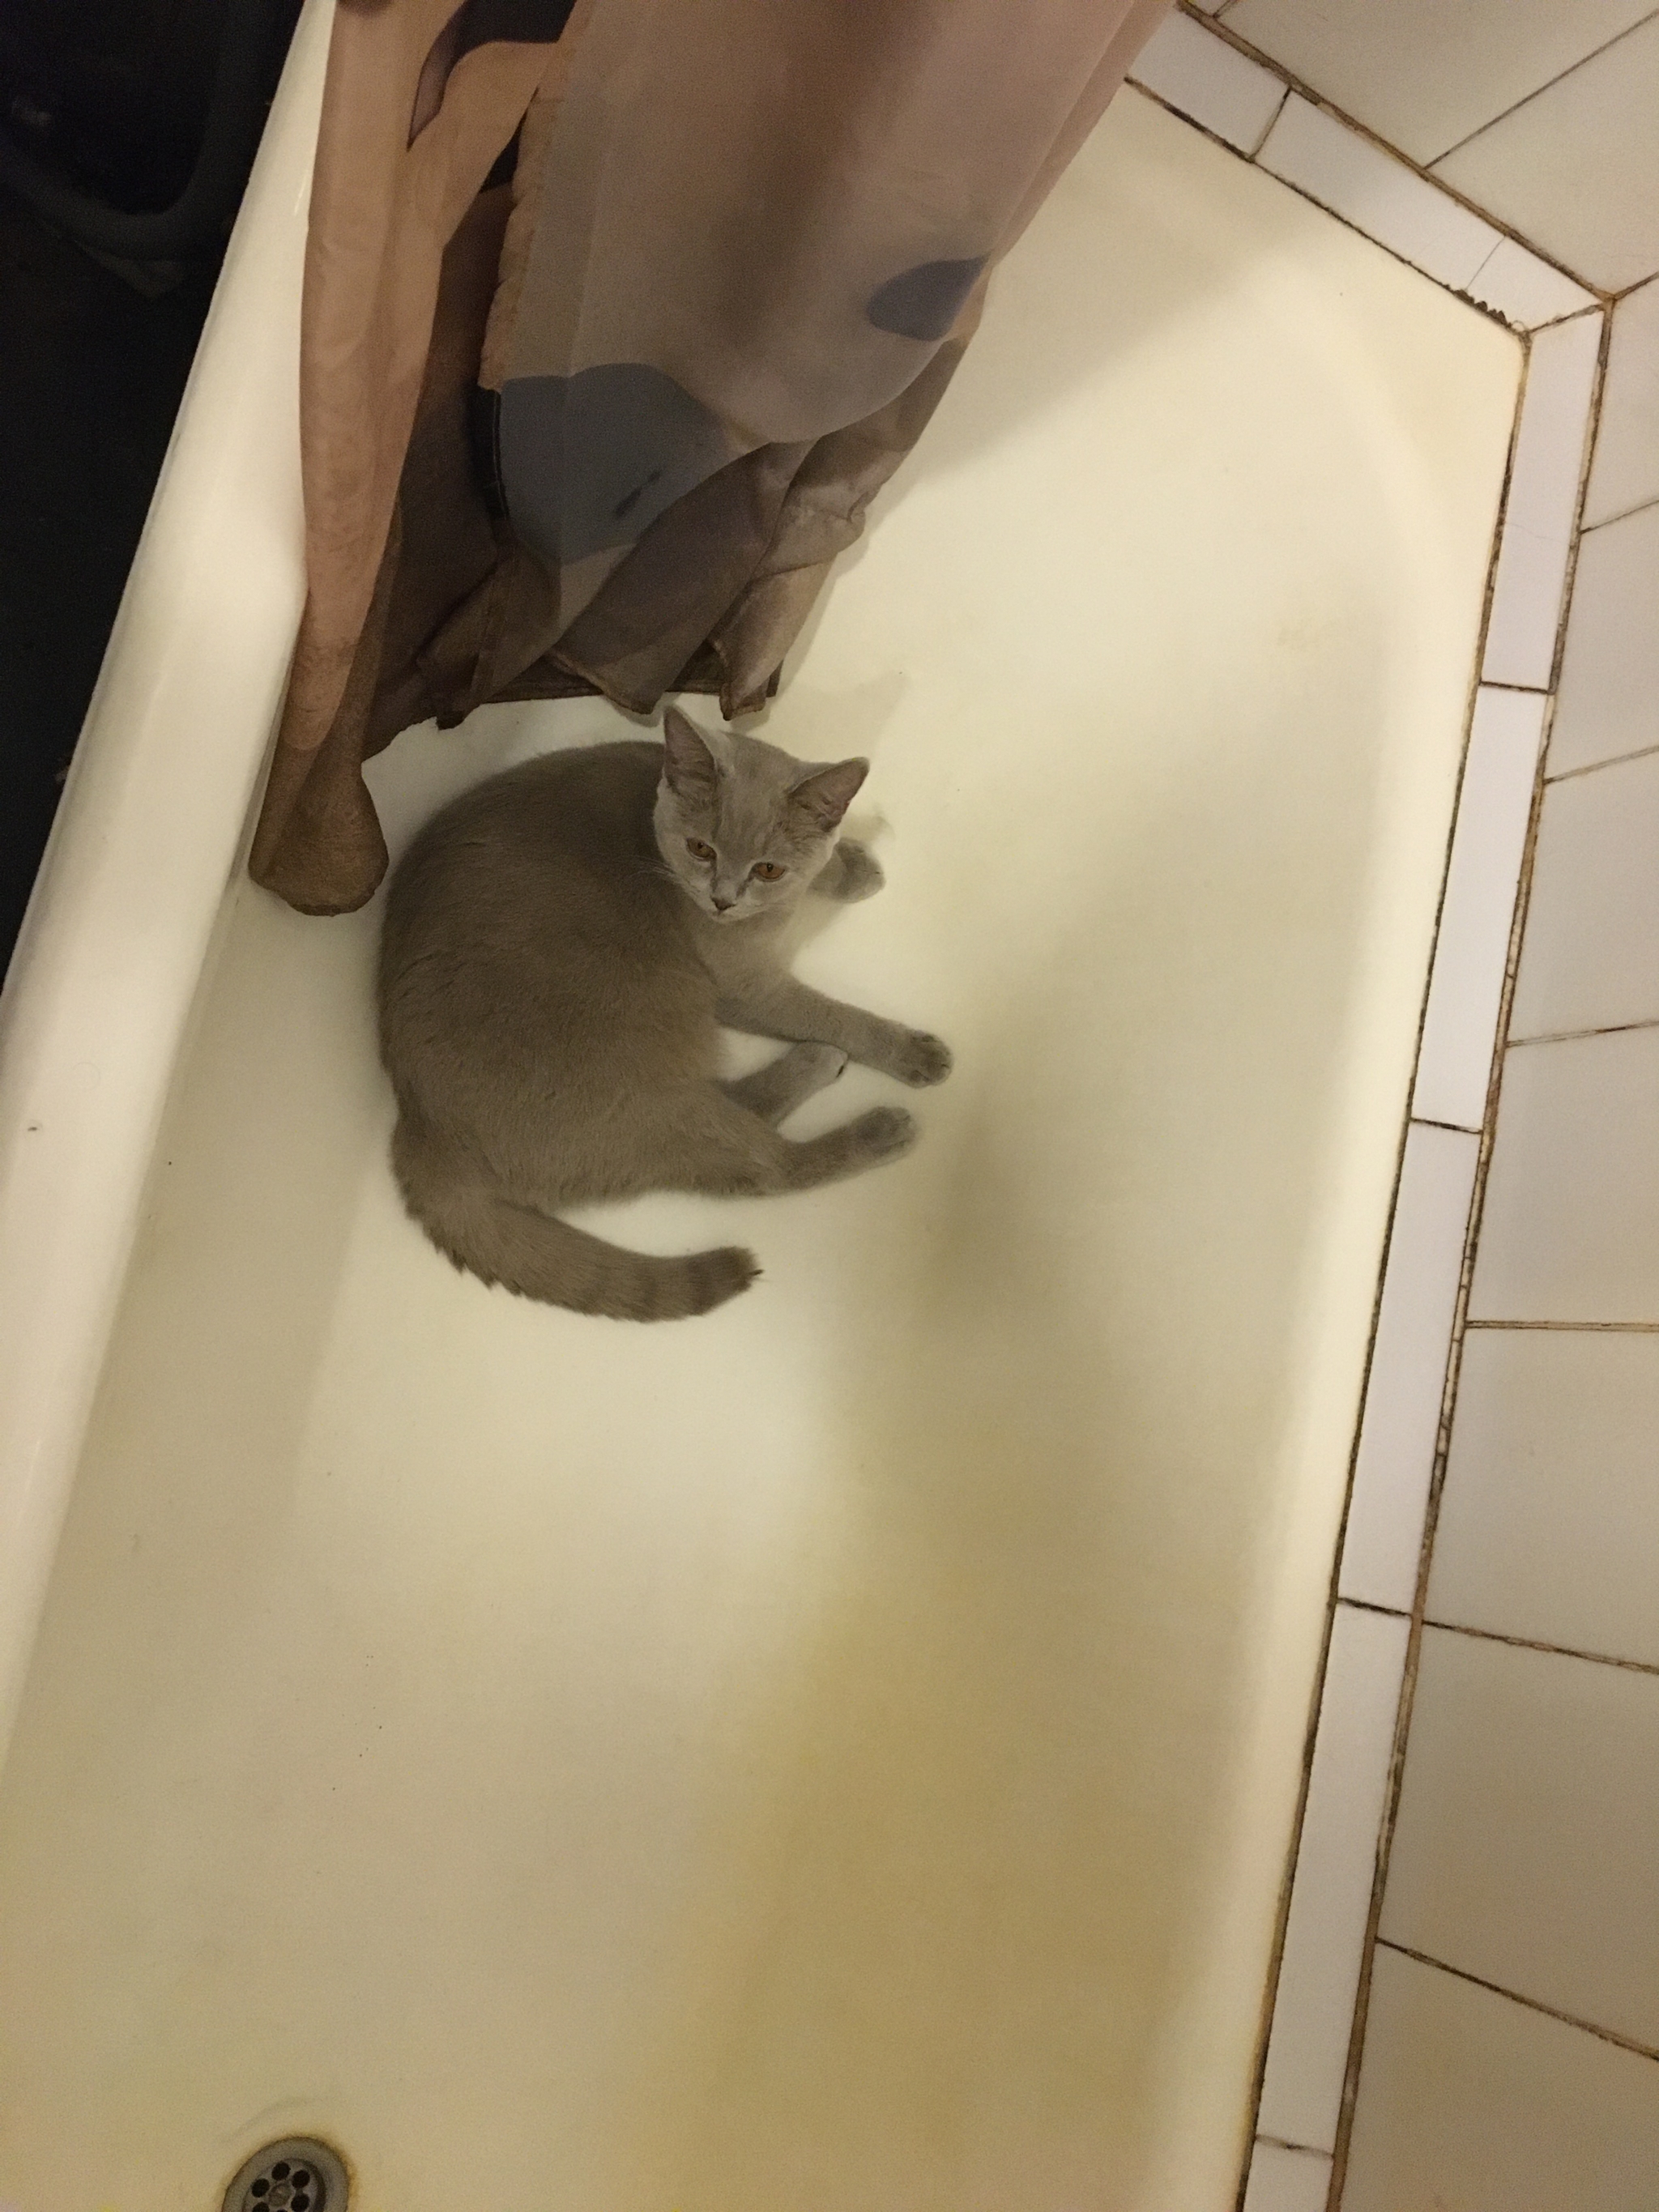 “Master, when will this heat end?” - My, Bath, British Shorthair, cat